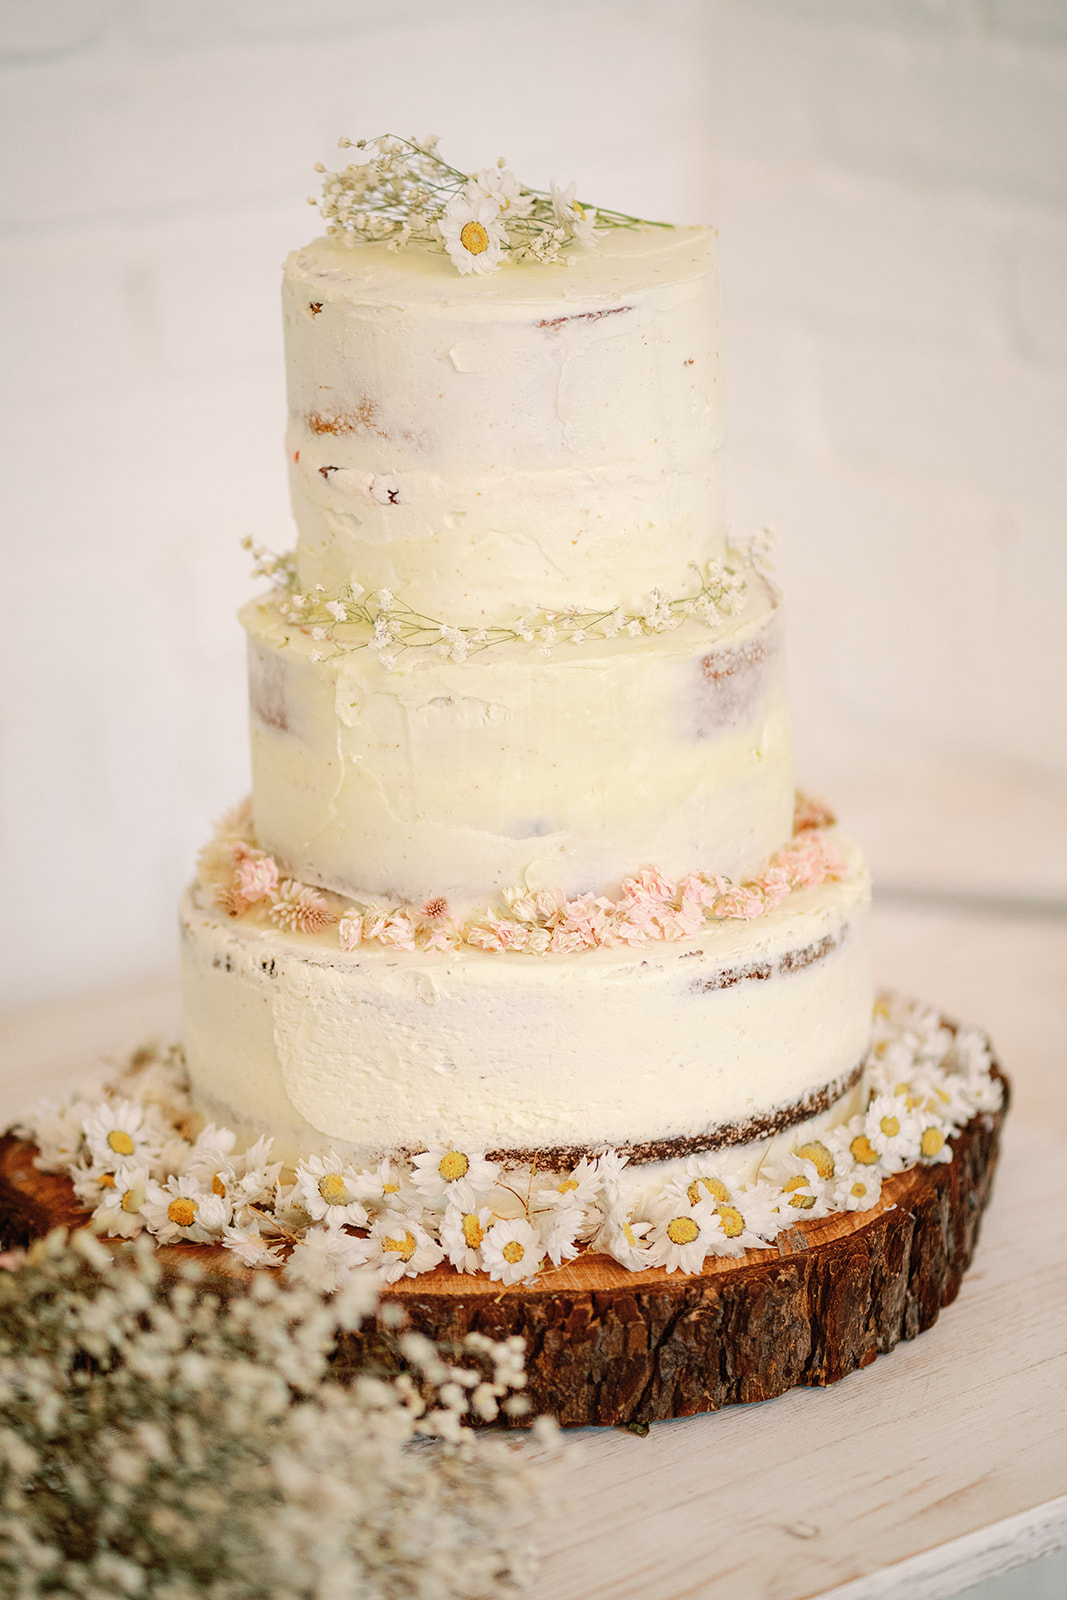 Beautifully simple wedding cake for small wedding celebration.